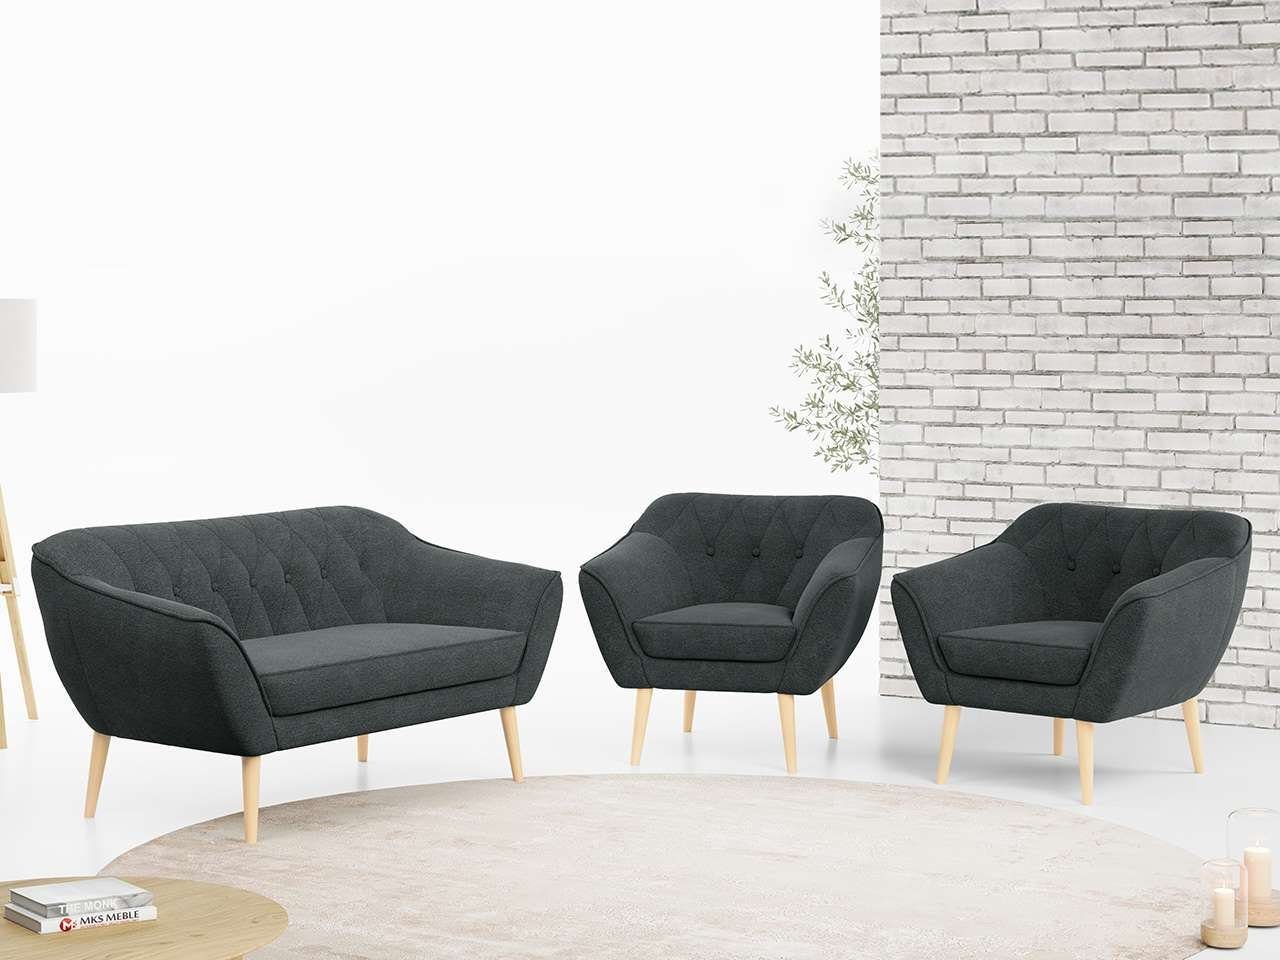 MKS MÖBEL Sofa PIRS 2 1 1, Moderne Sofa Set, Skandinavische Deko, Pirs Loungesofa und Zwei Sessels Dunkelgrau Matana